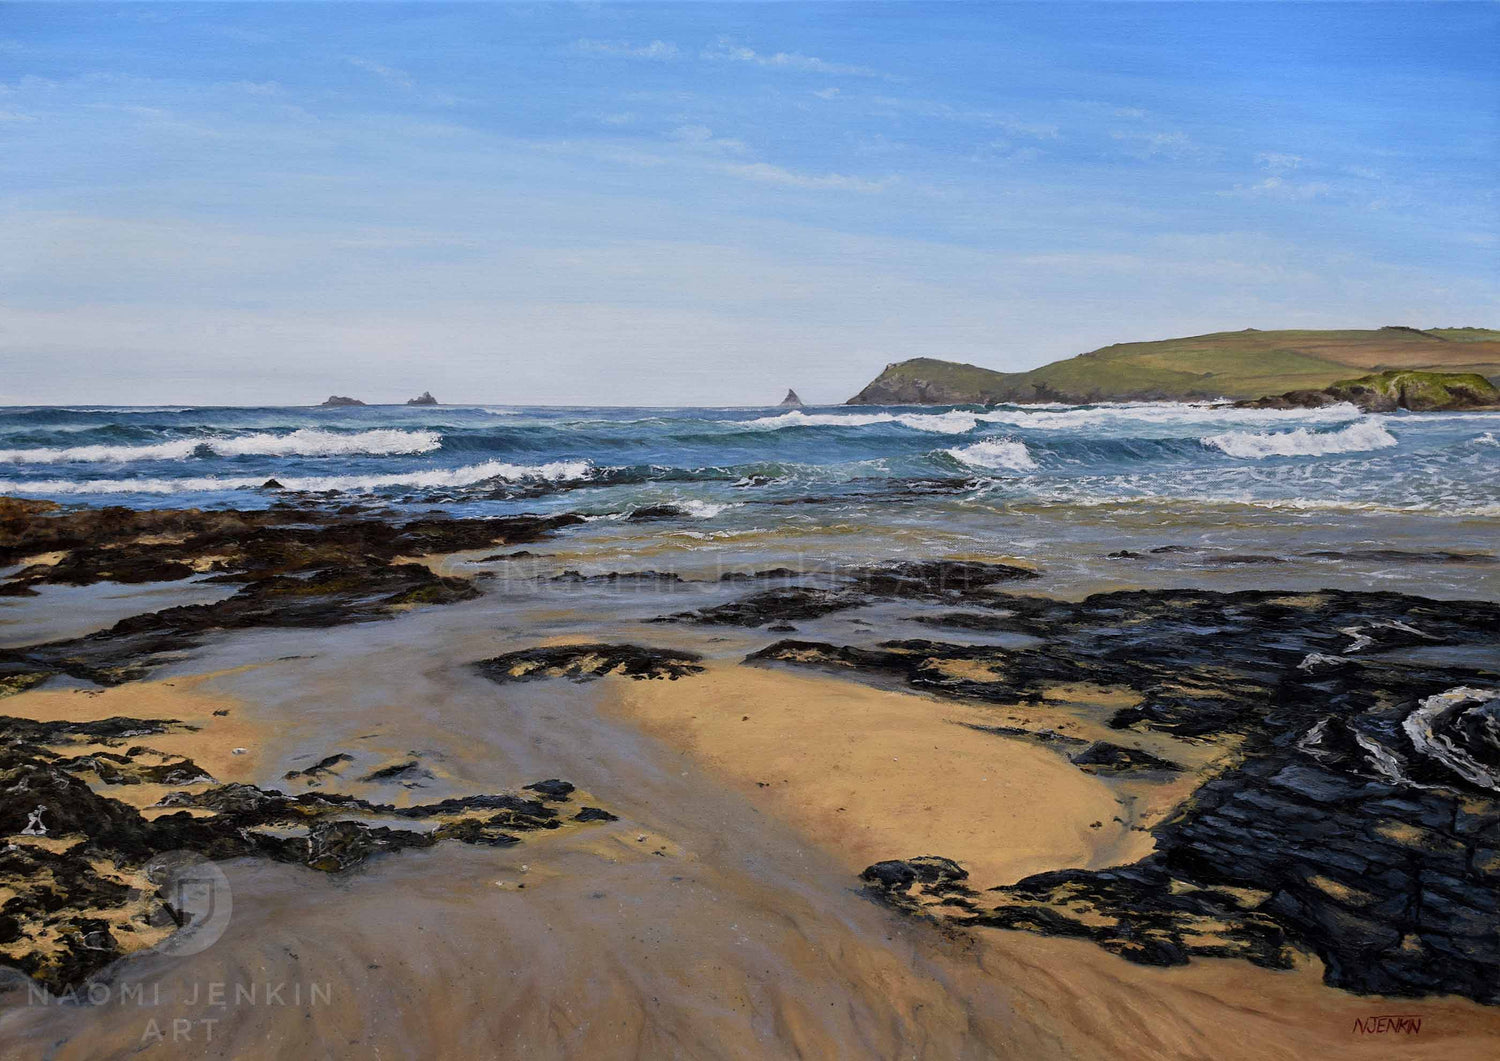 Fine art seascape painting of Constantine Bay by artist Naomi Jenkin Art